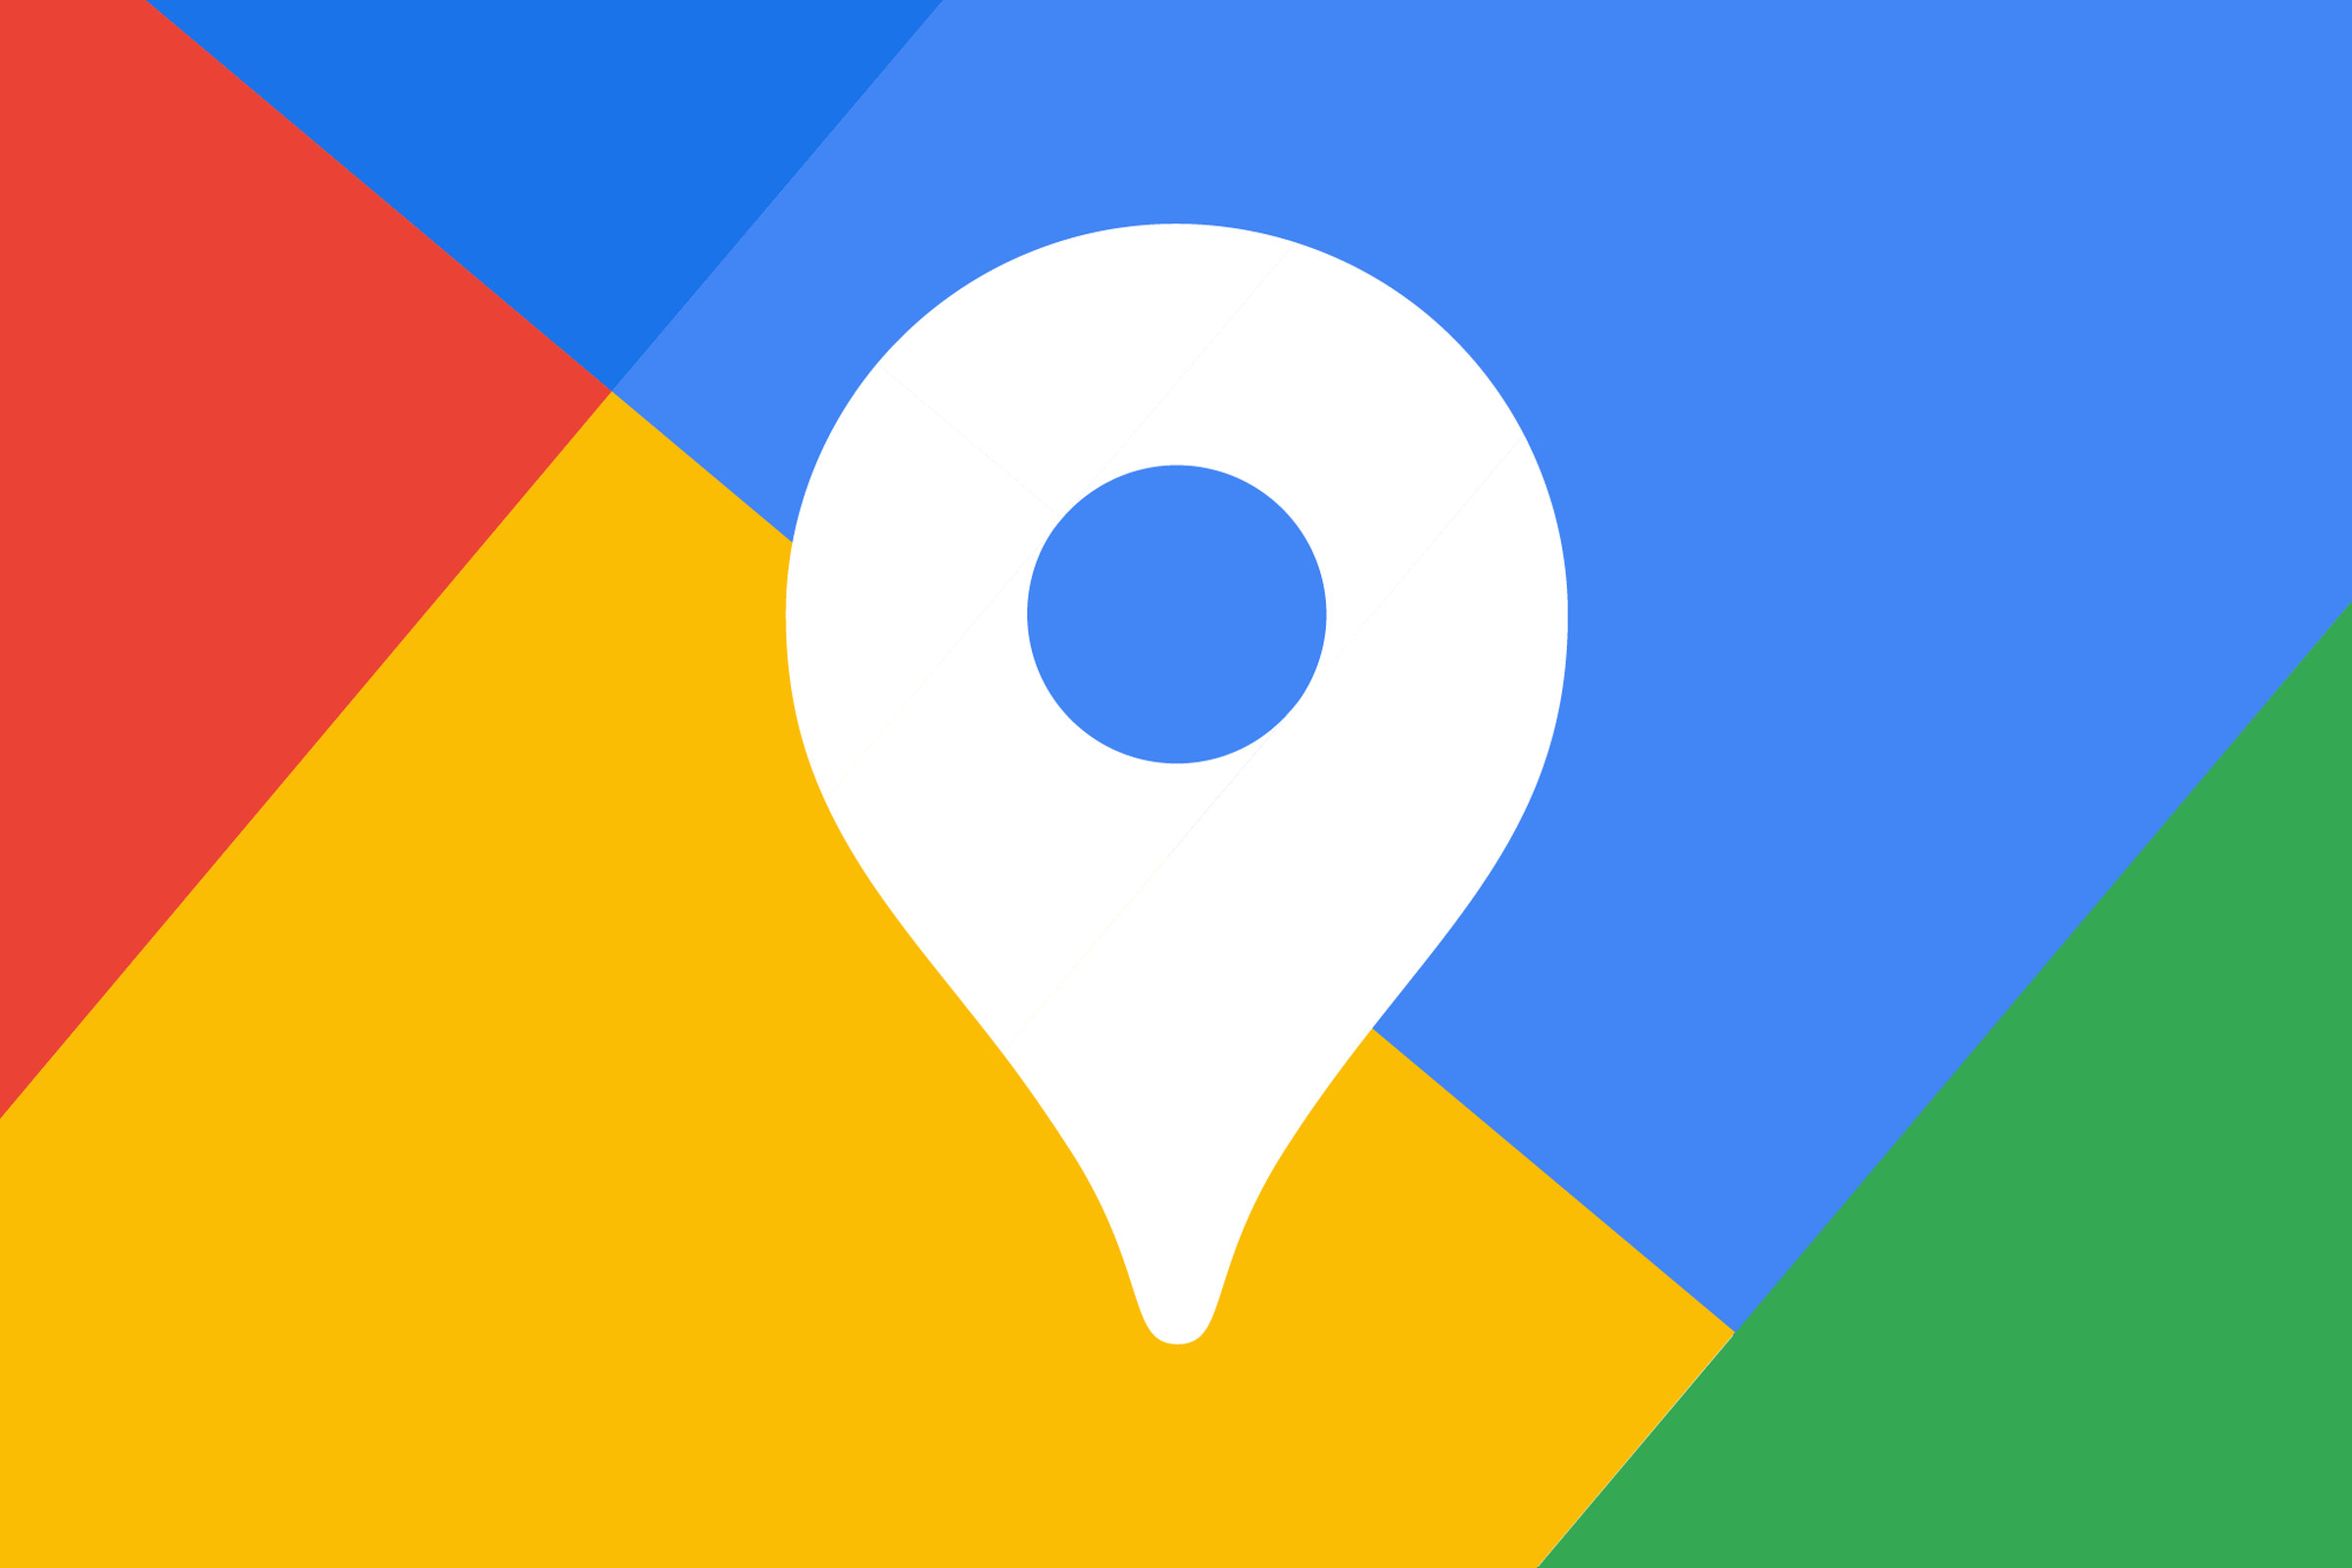 Vector illustration of the Google Maps logo.